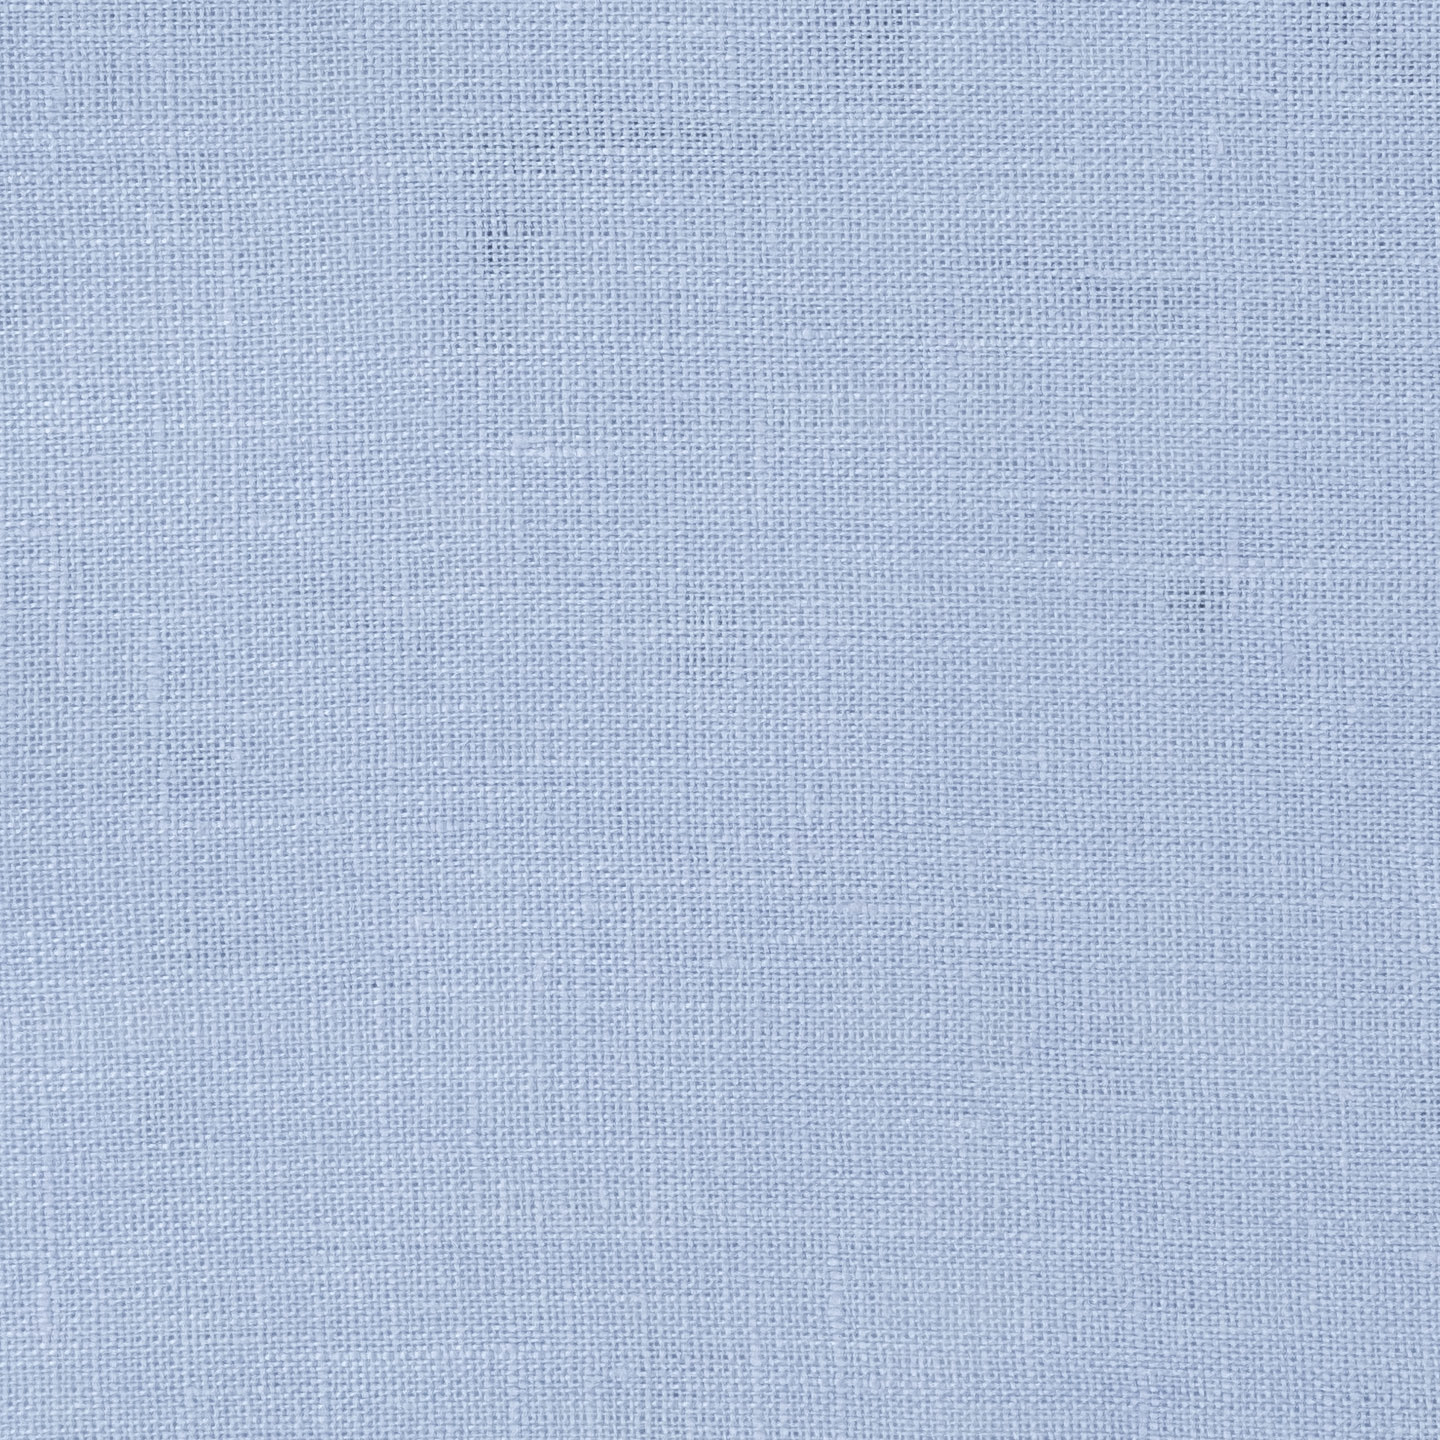 Linen Napkin or Handkerchief  - Pale Blue